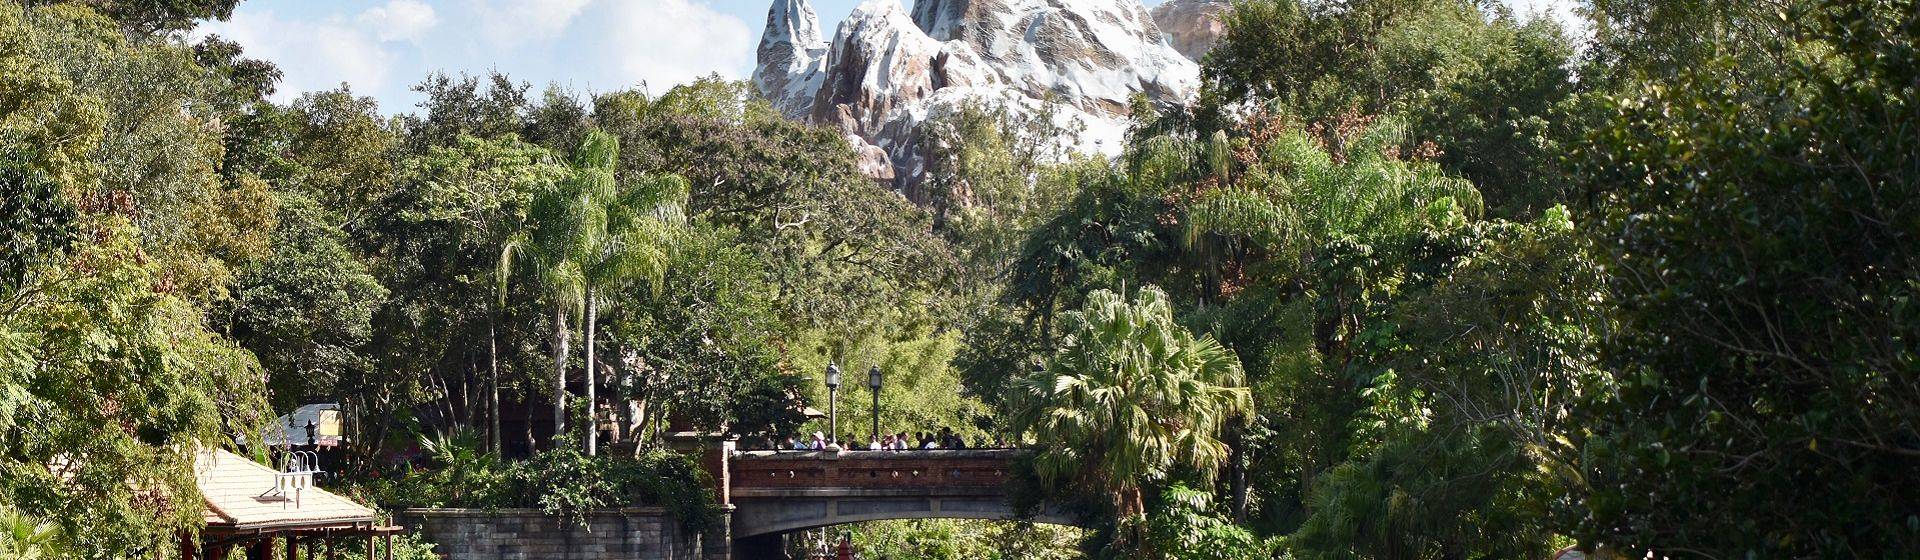 Holidays to Walt Disney World Resort Image